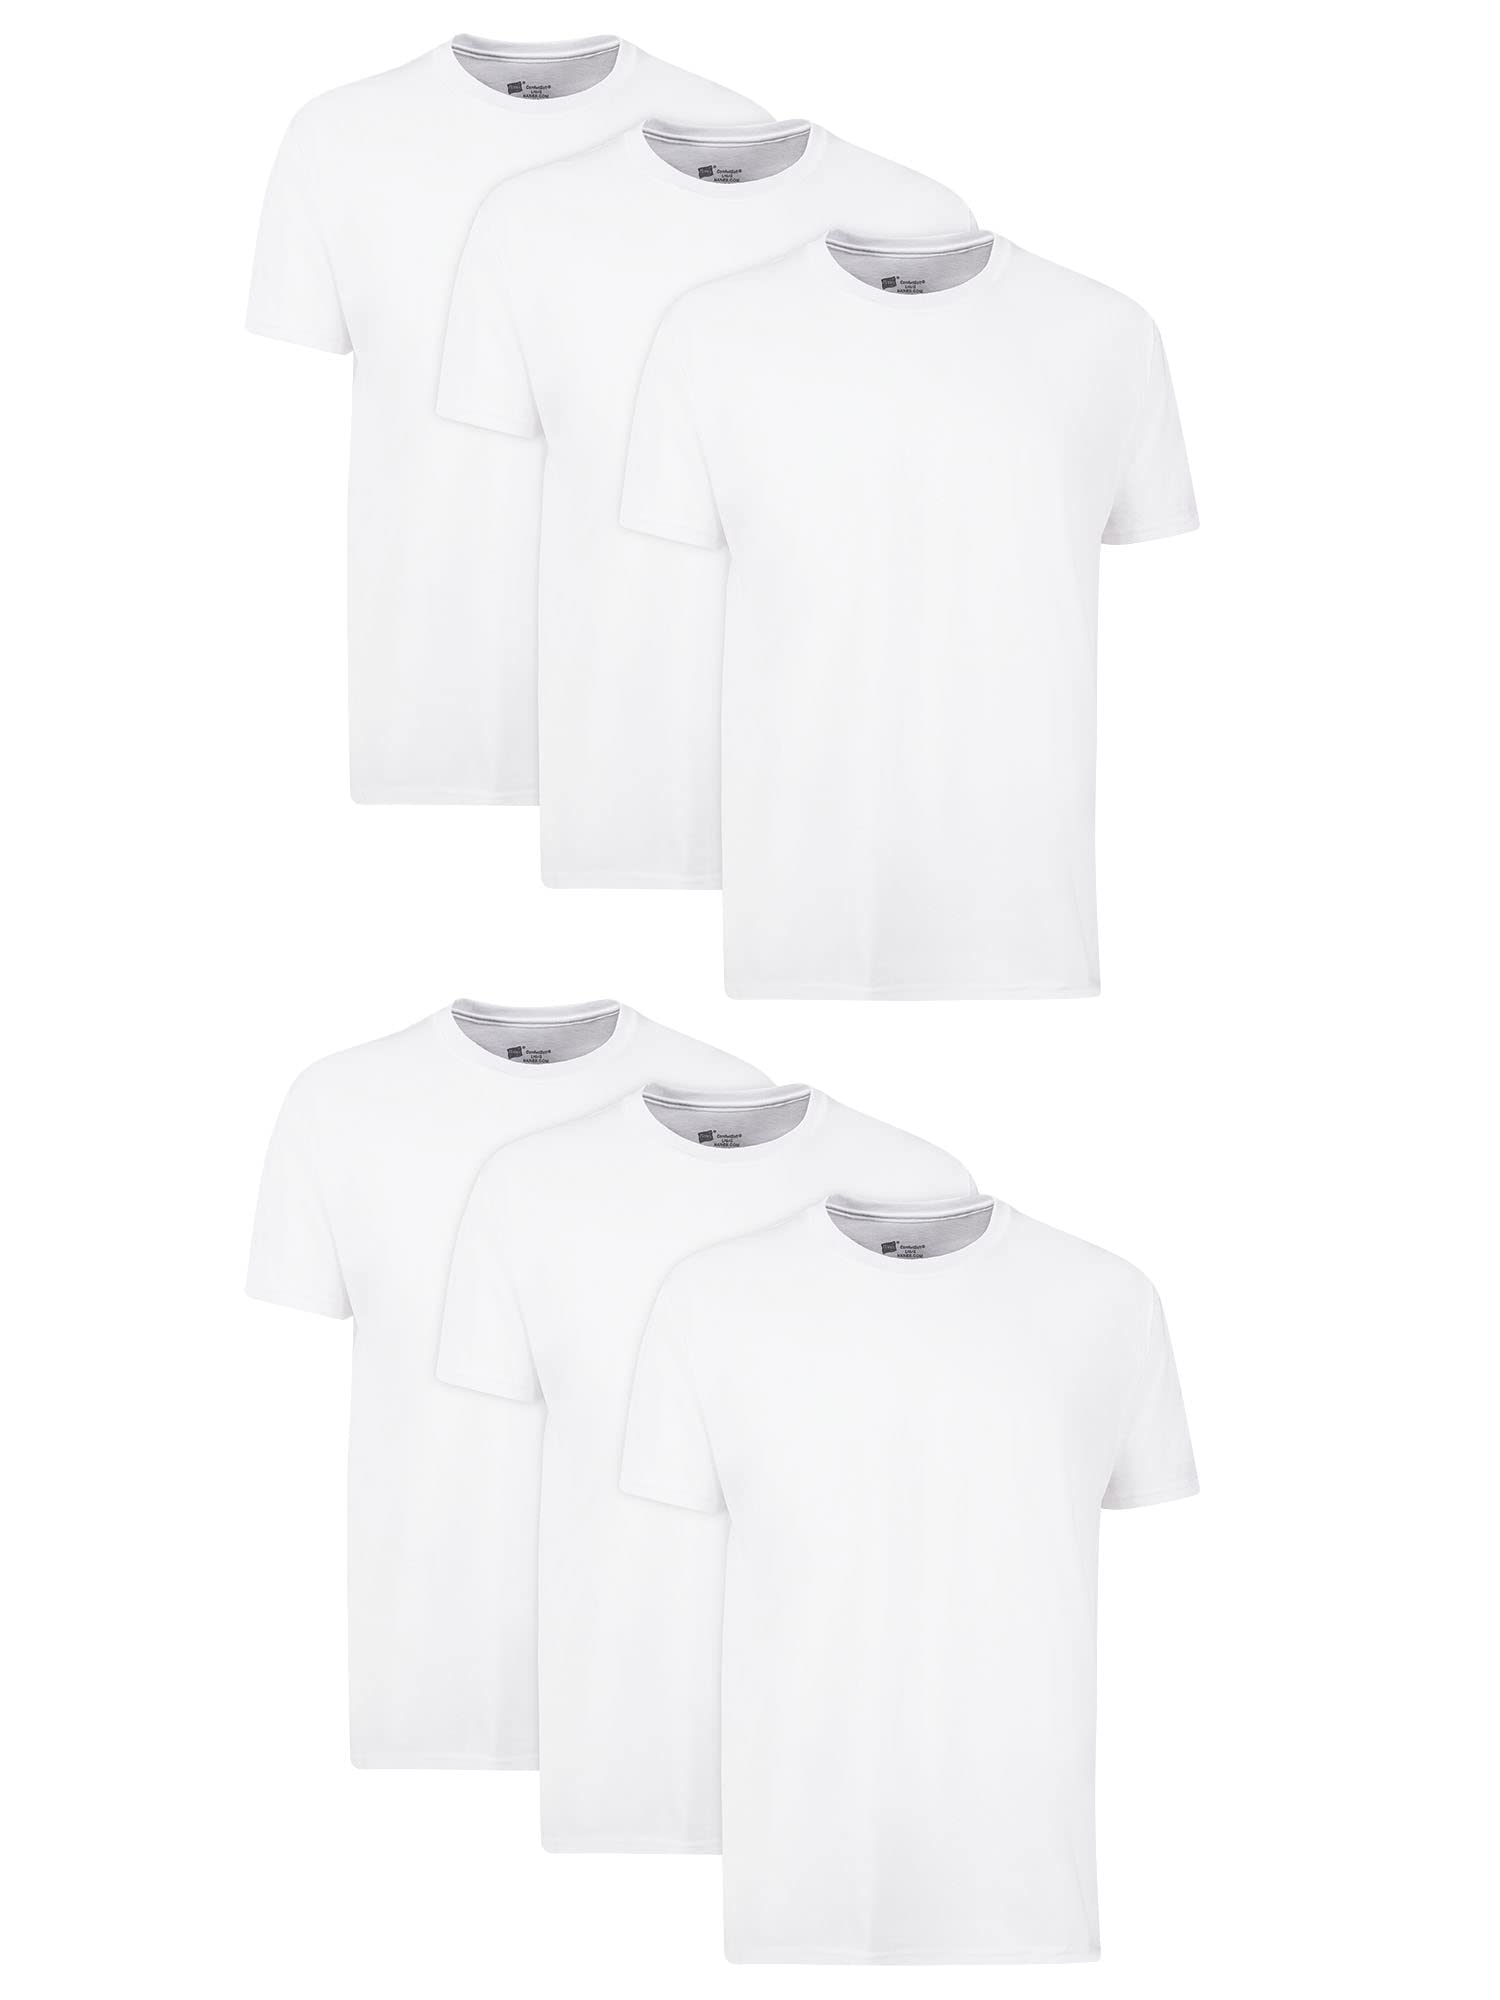 Hanes Men's Cotton Undershirts - Moisture-Wicking Crew Neck Tees, 6 Pack - White, Regular Fit